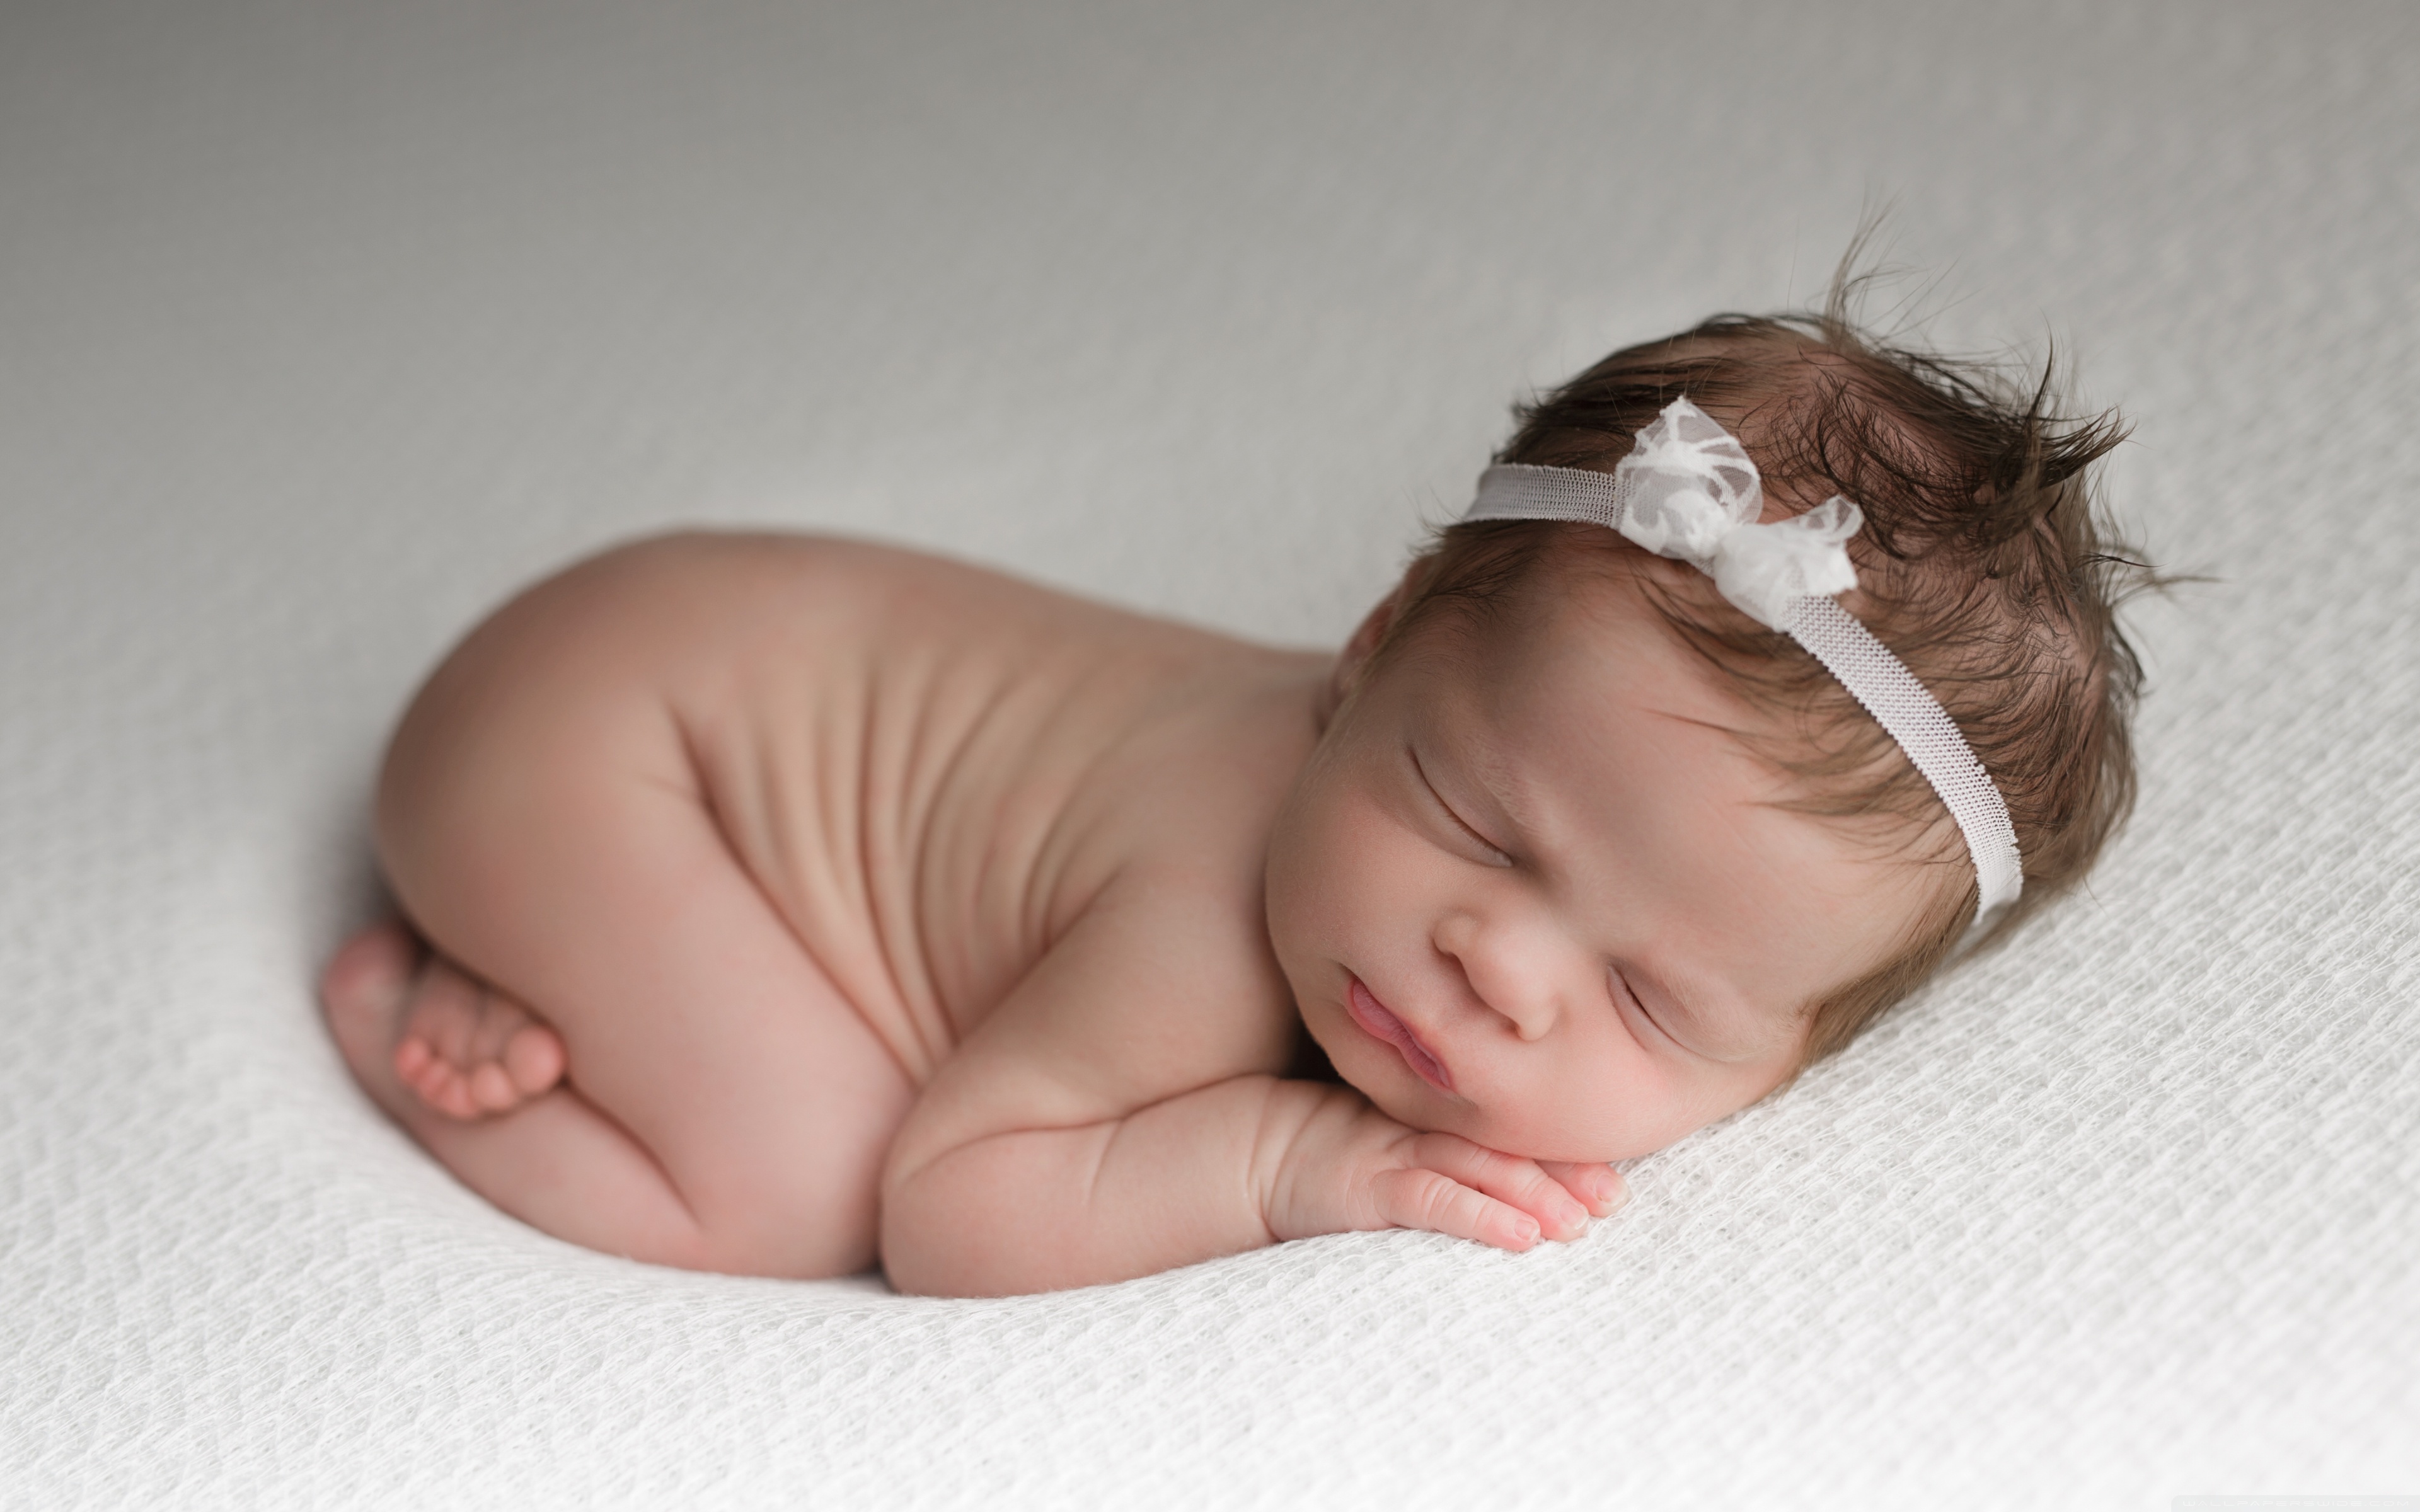 Cute Newborn Baby - 960x640 Wallpaper 